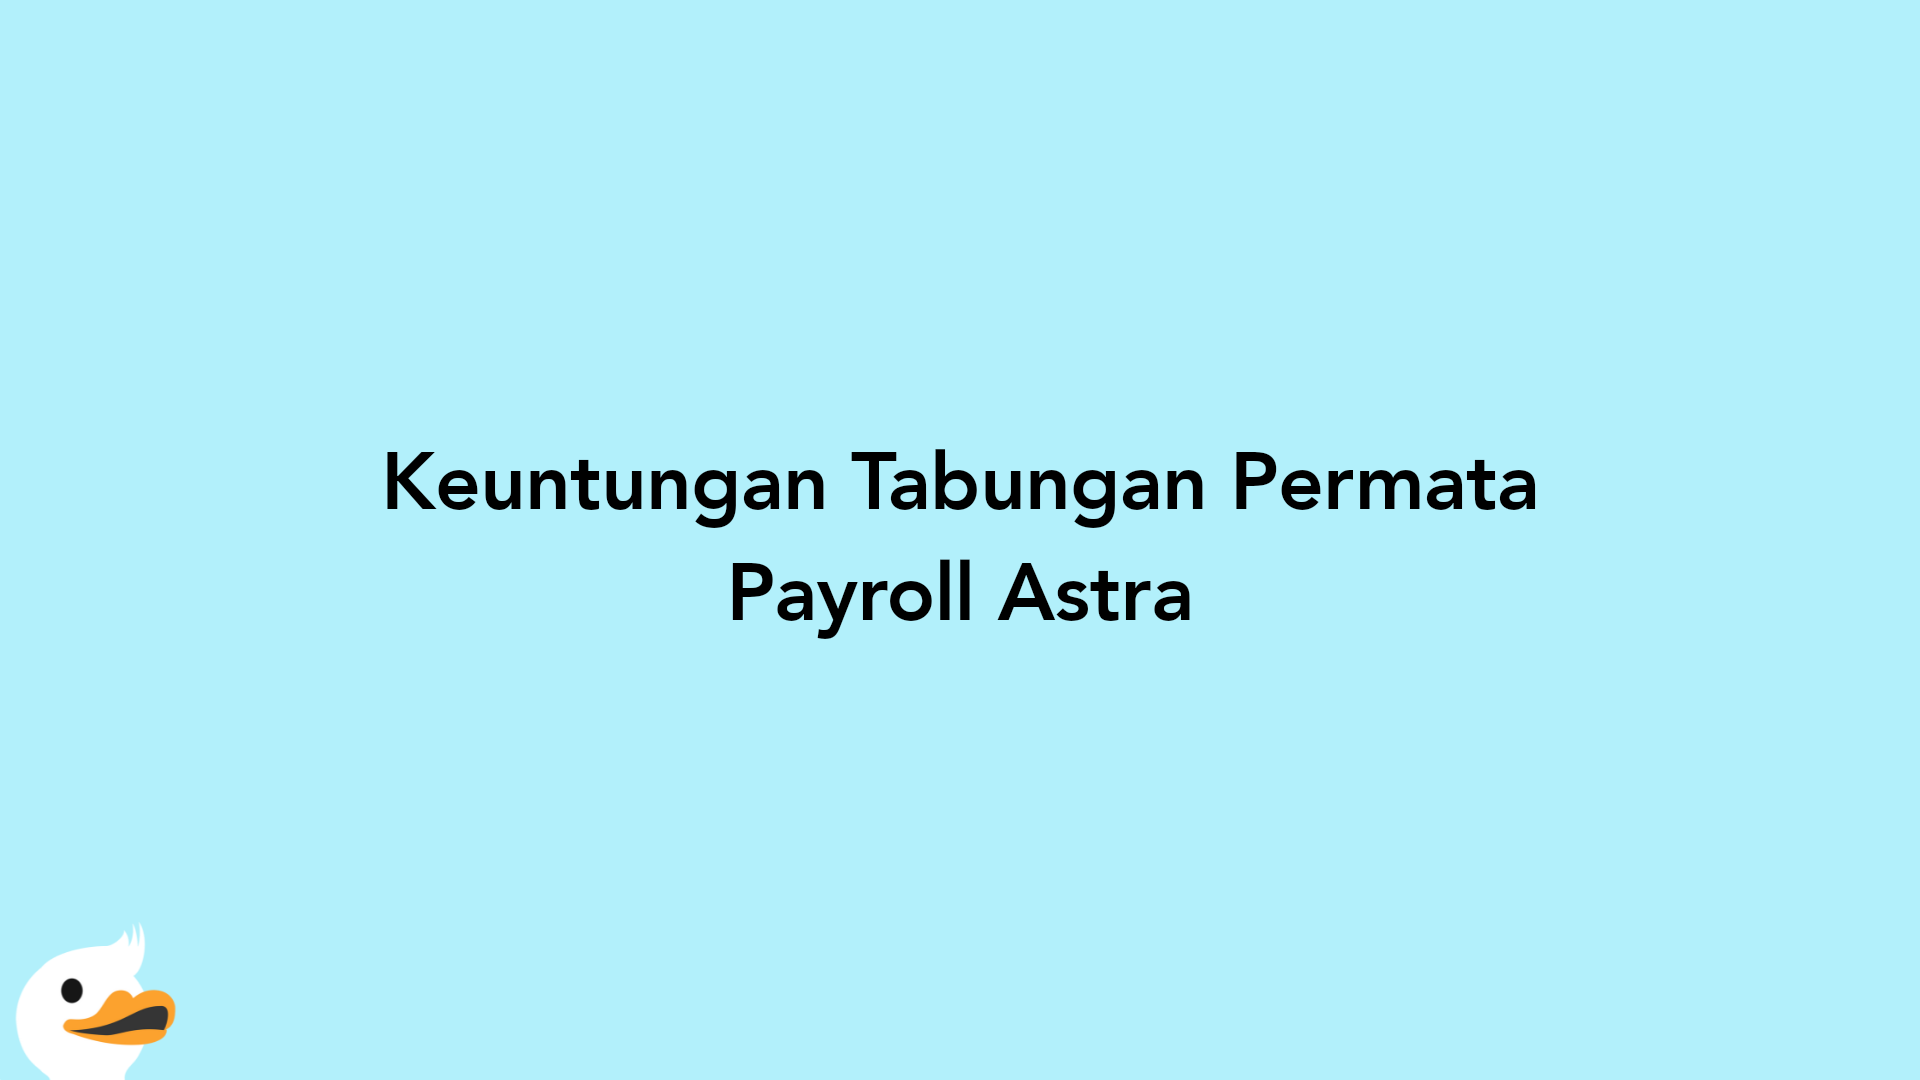 Keuntungan Tabungan Permata Payroll Astra